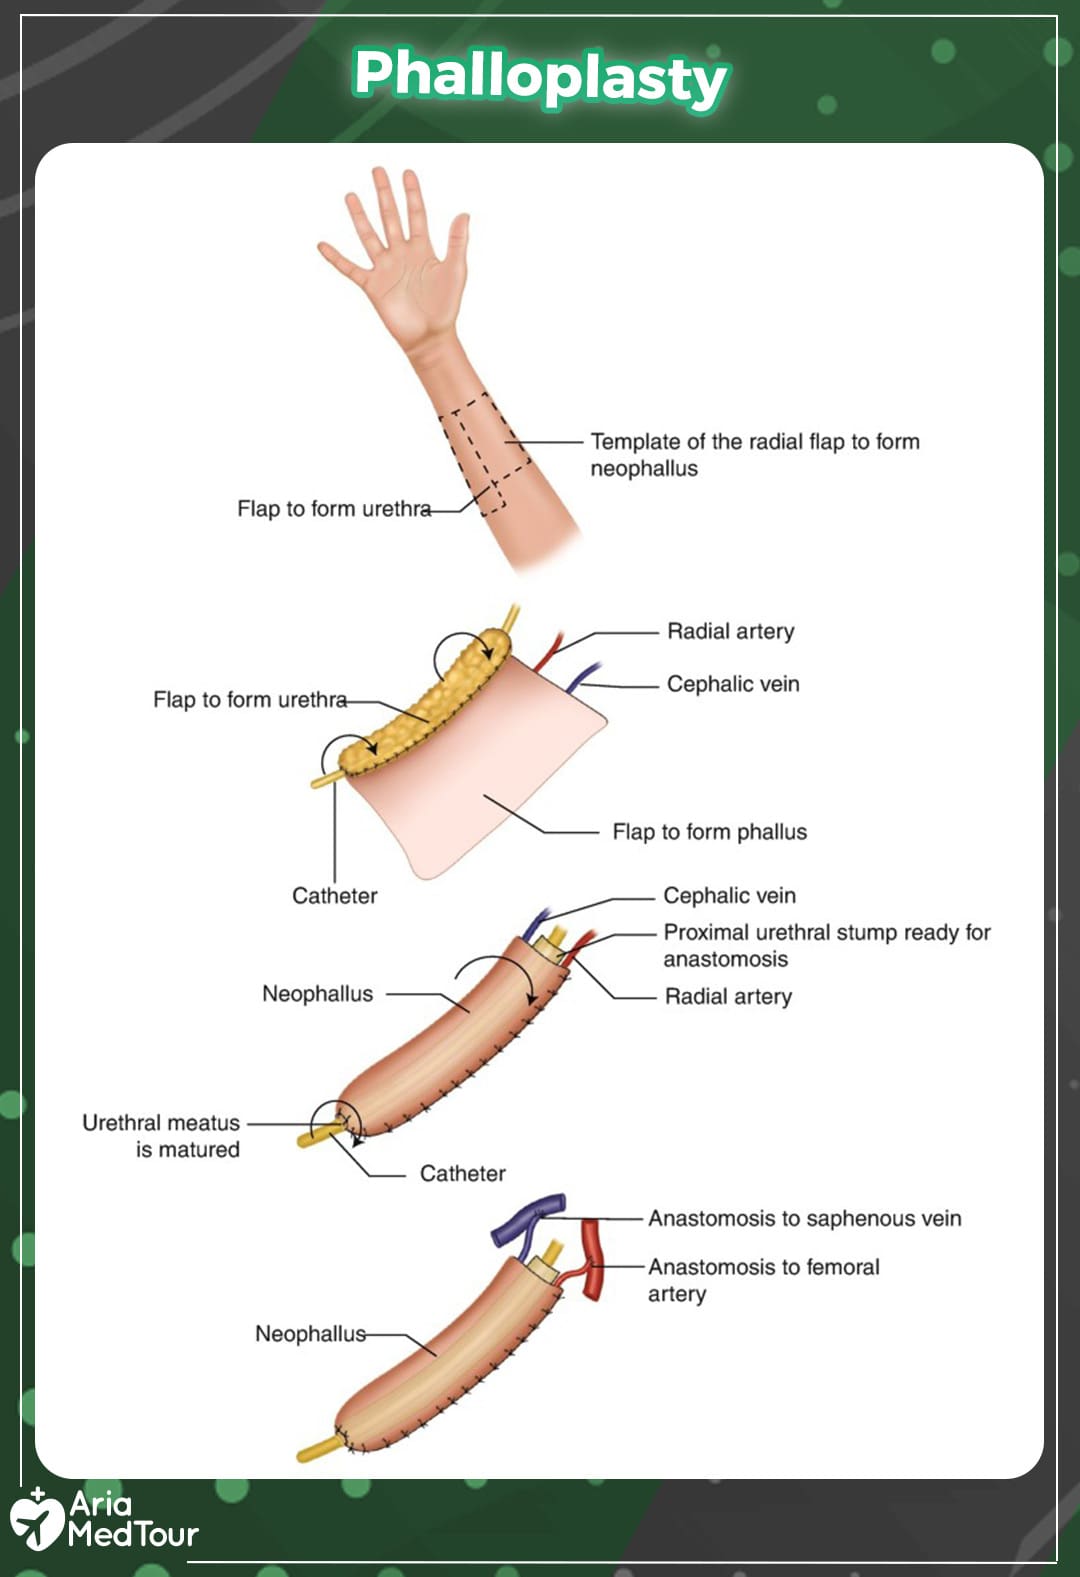 an infographic image showing Phalloplasty